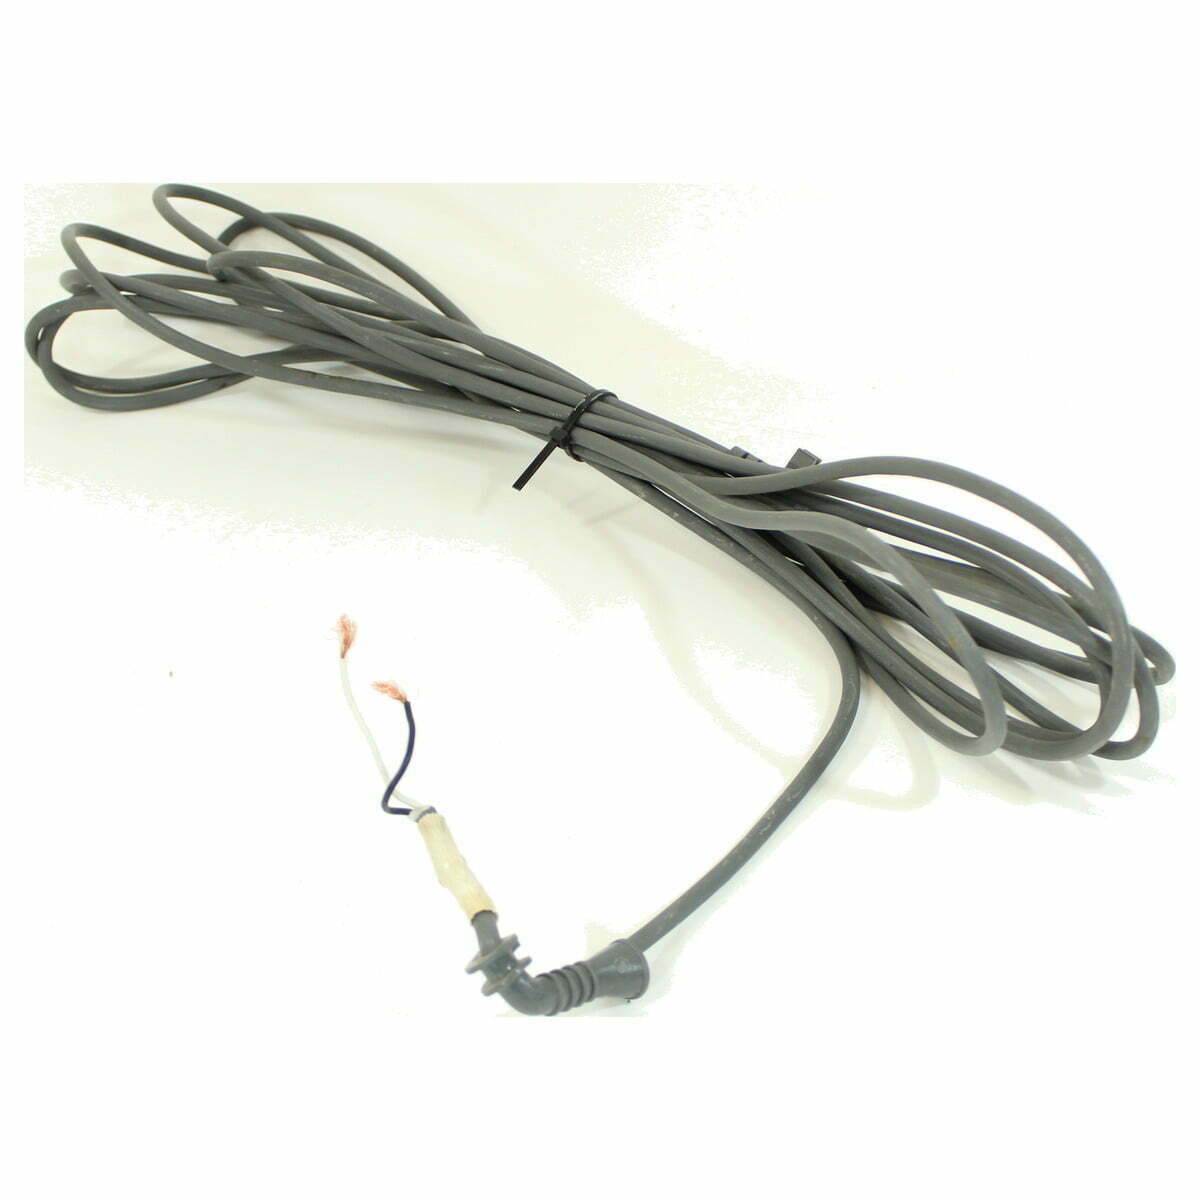 OEM Shark NV352 NV351 NV350 NV353 Power Cord Cable Plug Replacement Free Ship 